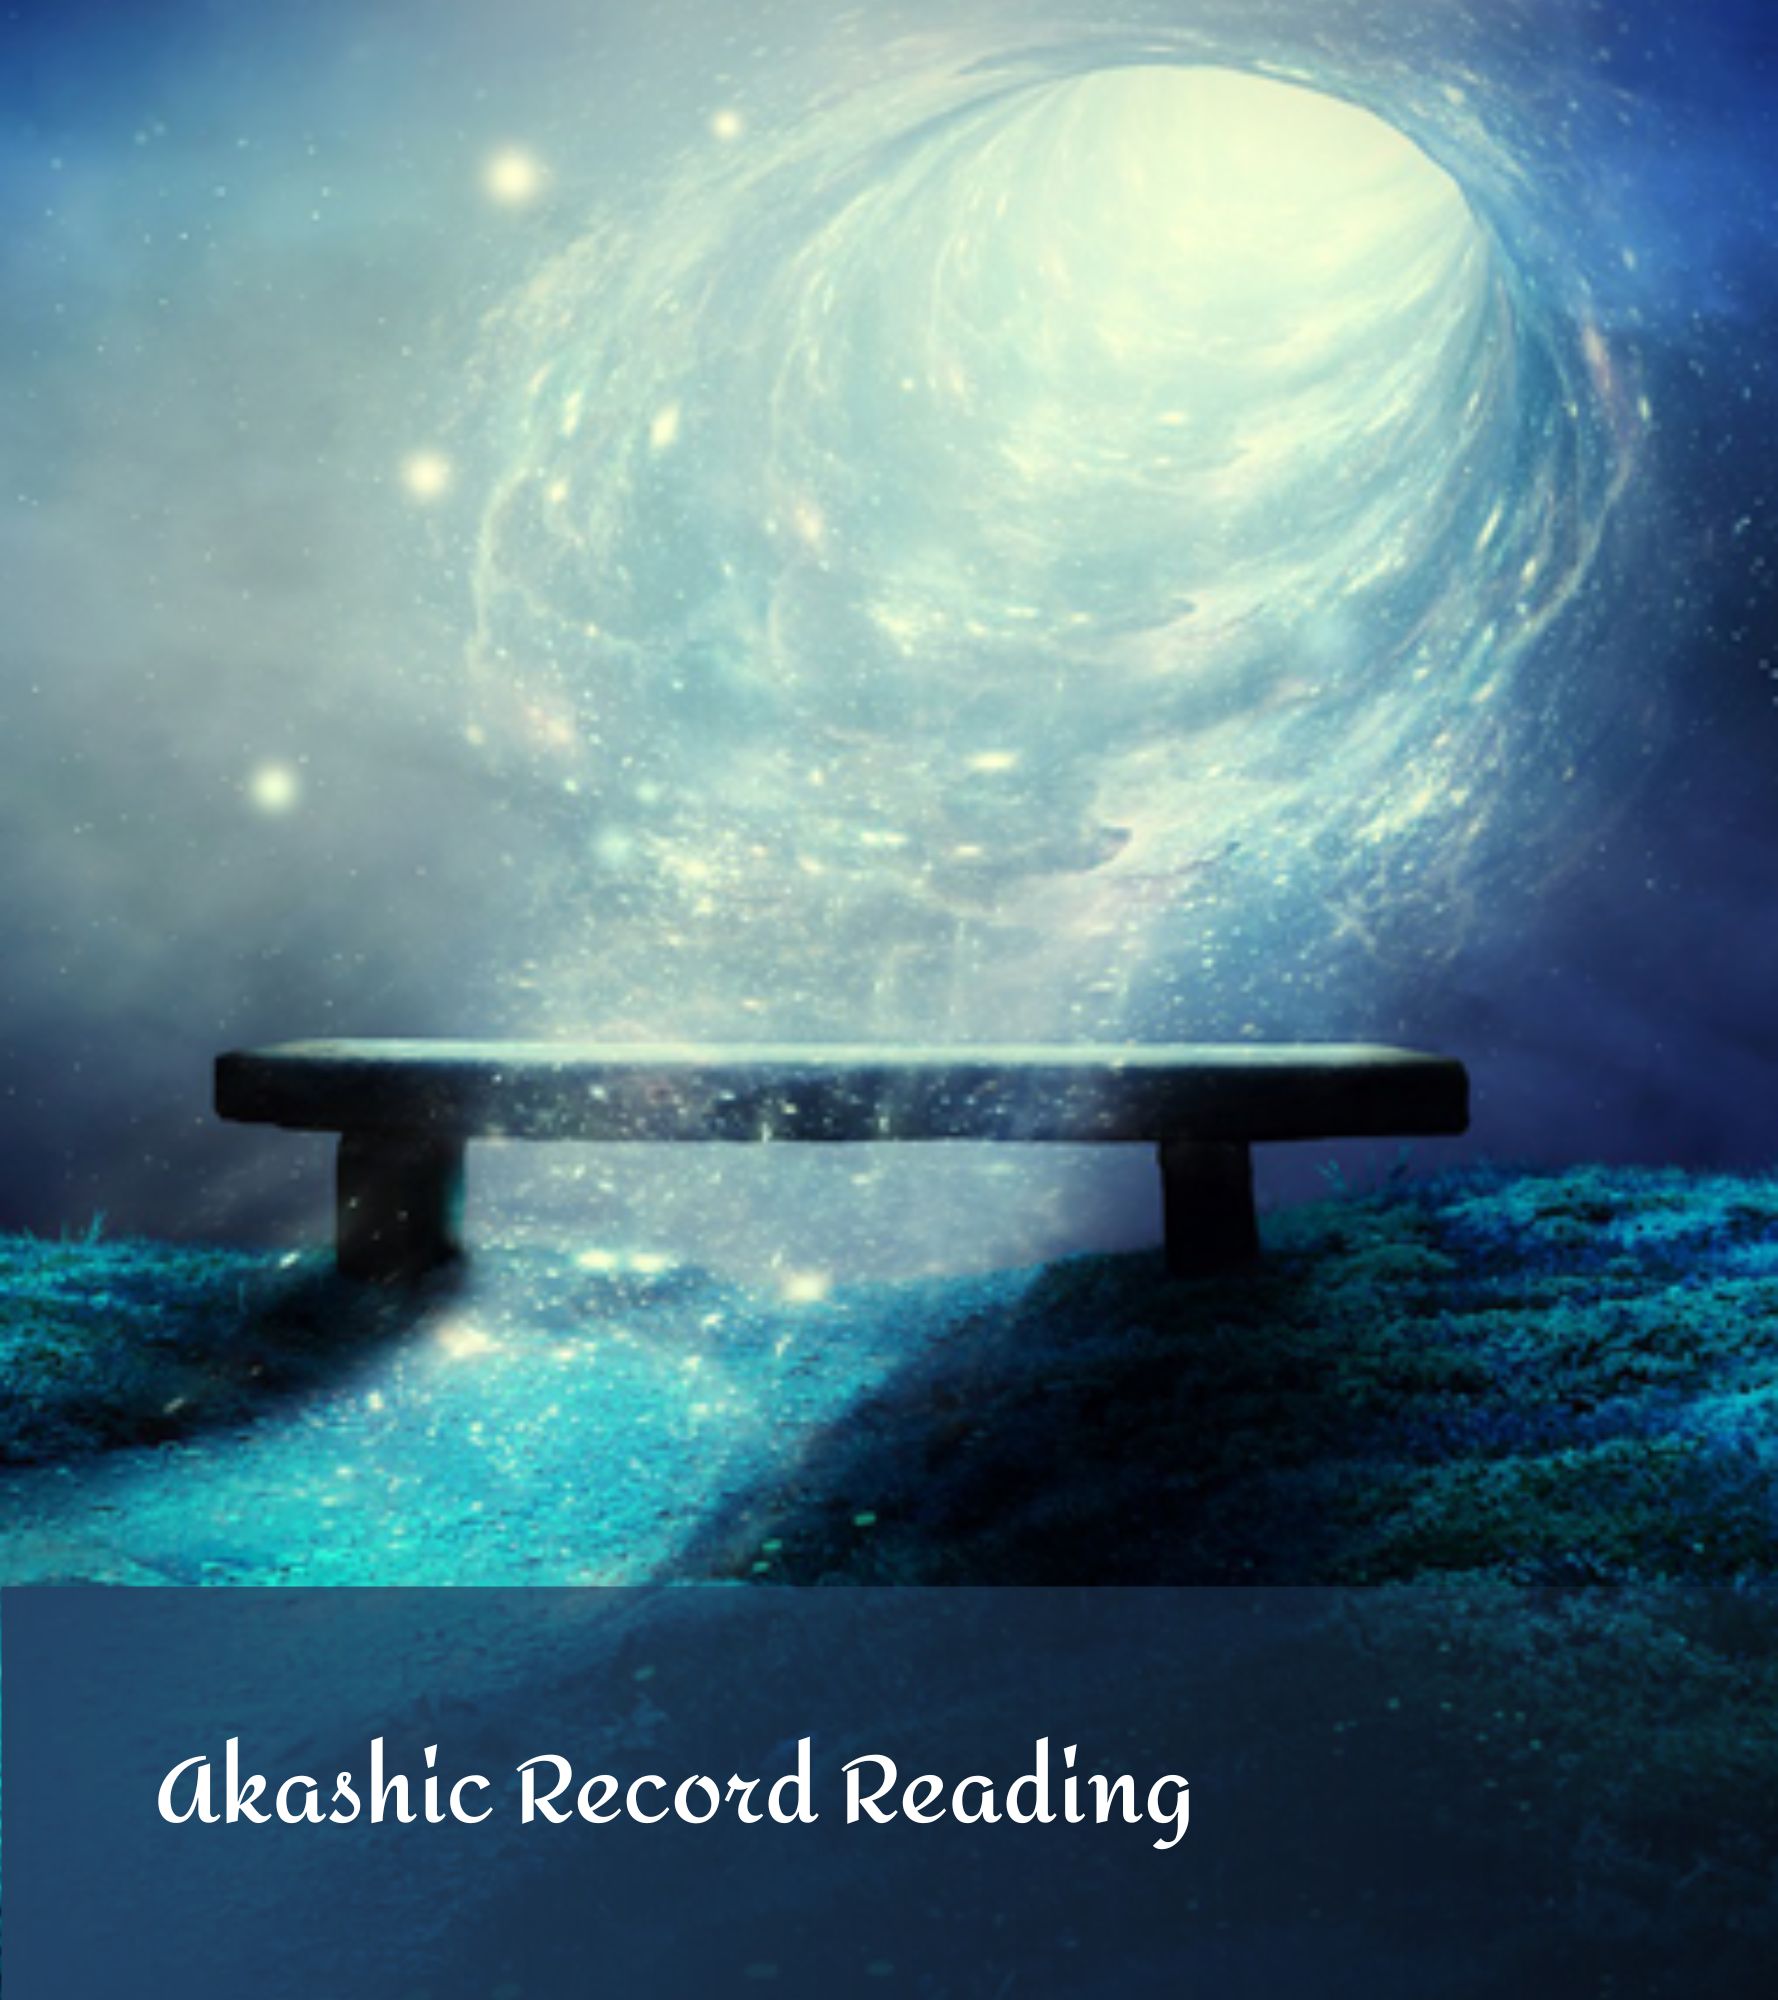 Akashic Record Reading